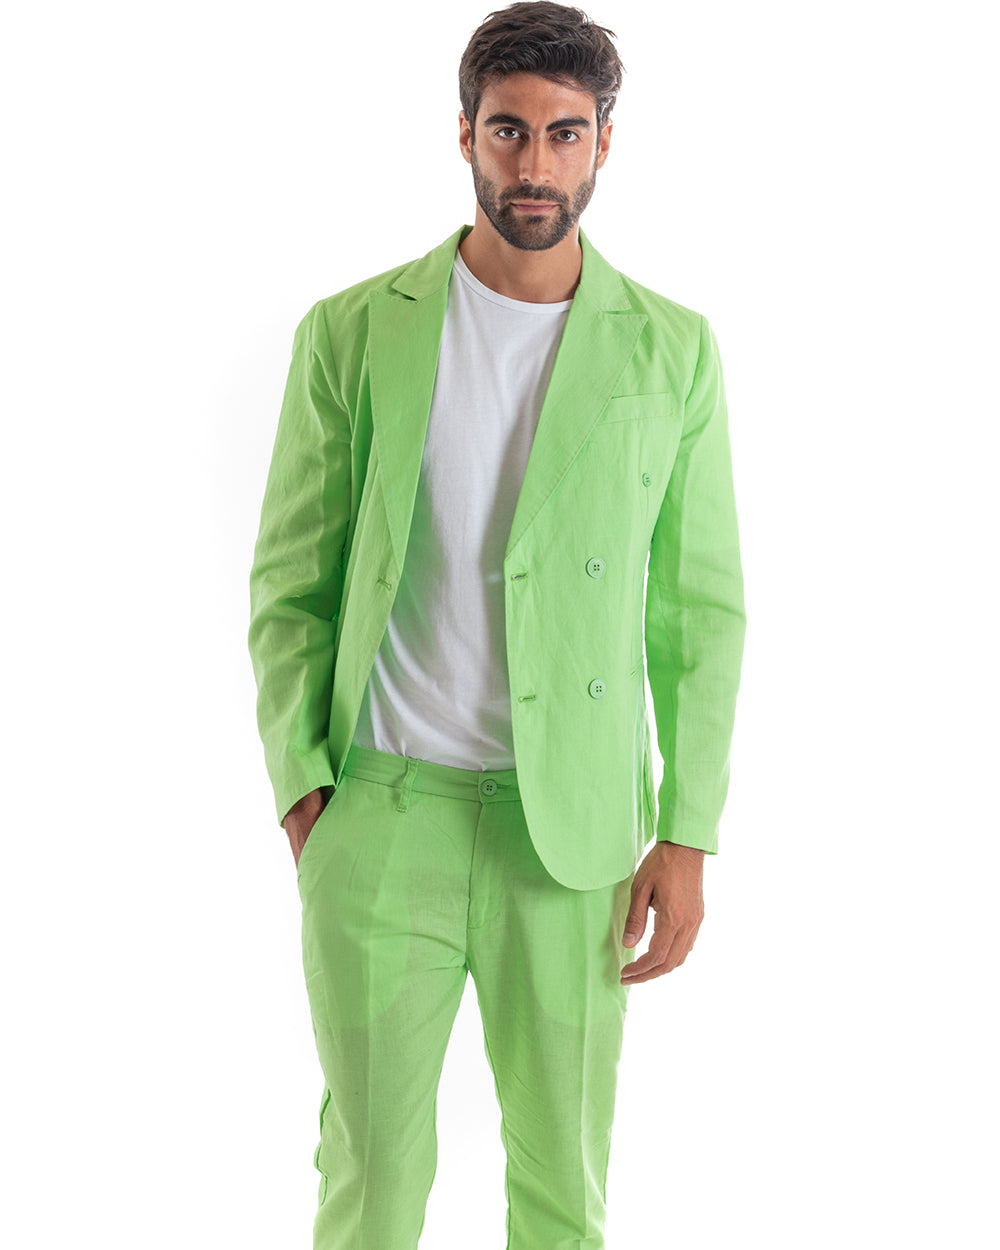 Men's Suit Double Breasted Linen Suit Suit Jacket Trousers Pea Green Elegant Ceremony GIOSAL-OU2133A